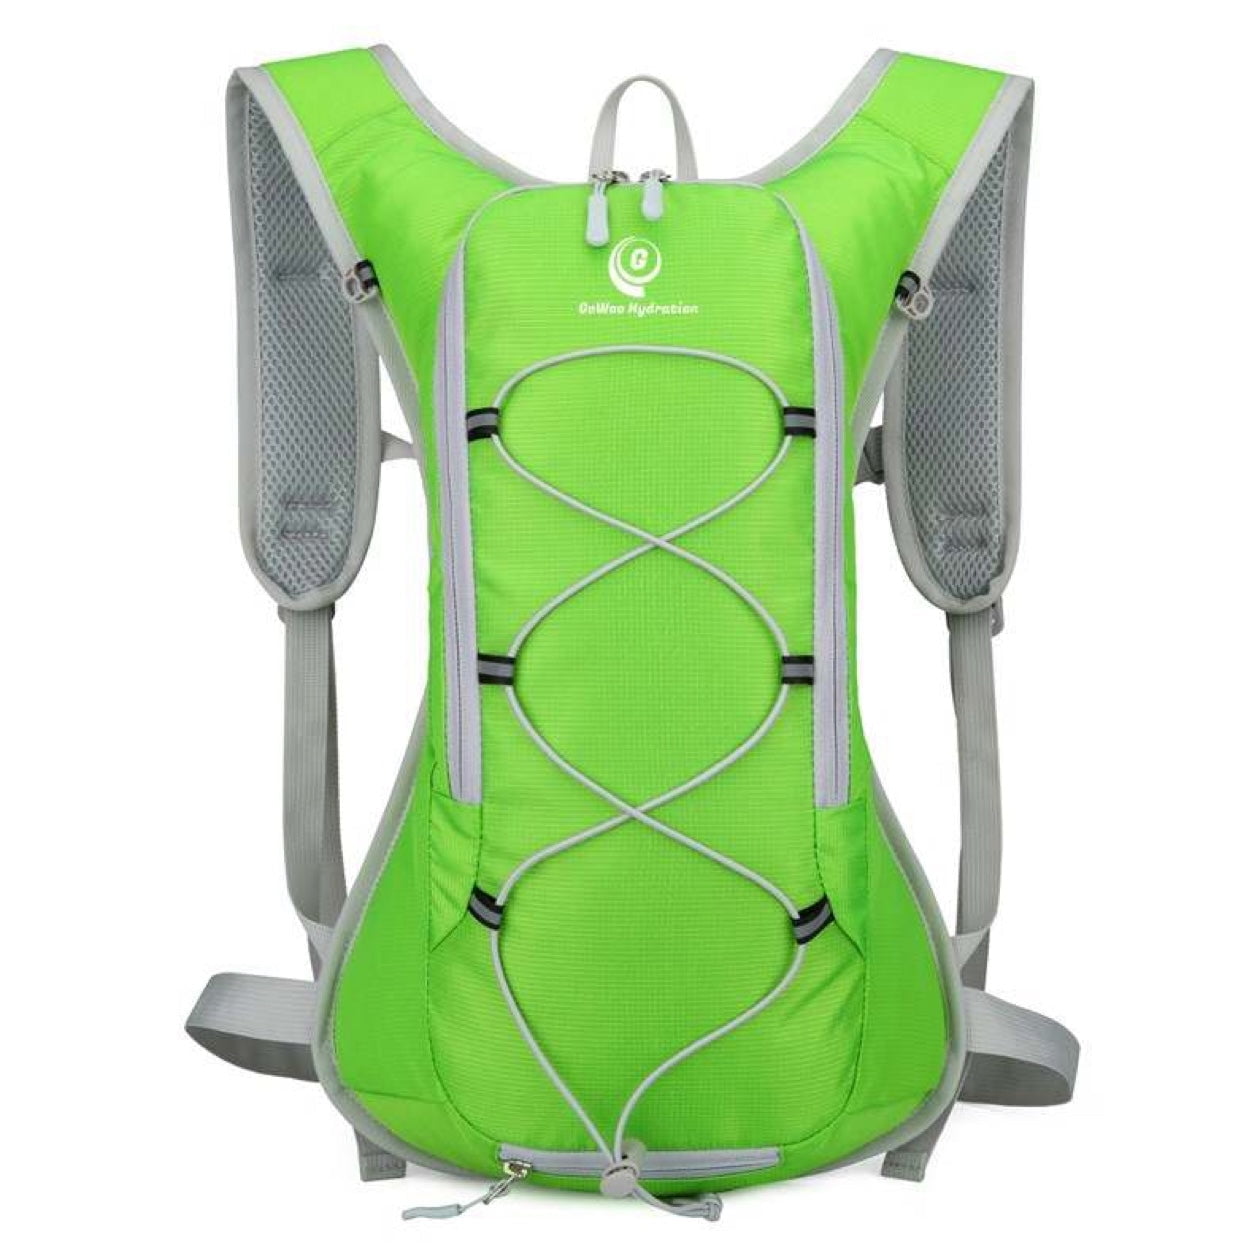 Gowoo Hydration Backpack Supreme - Lime Green & Gray - Walmart.com